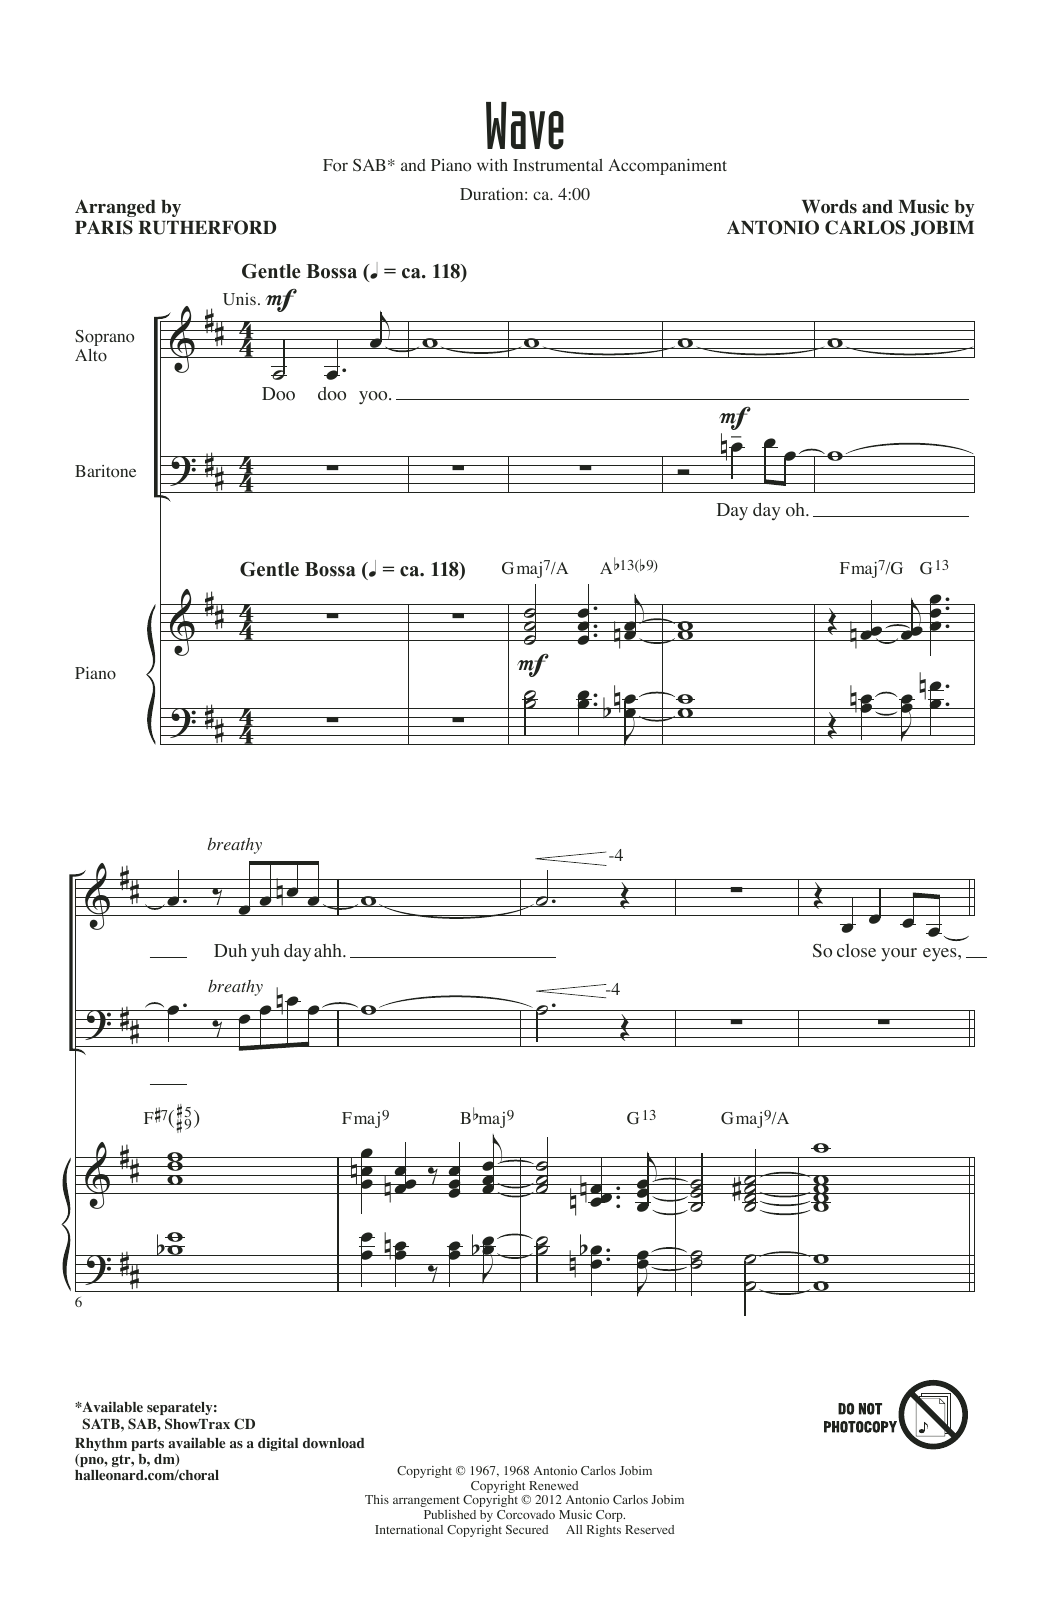 Paris Rutherford Wave Sheet Music Notes & Chords for SAB - Download or Print PDF